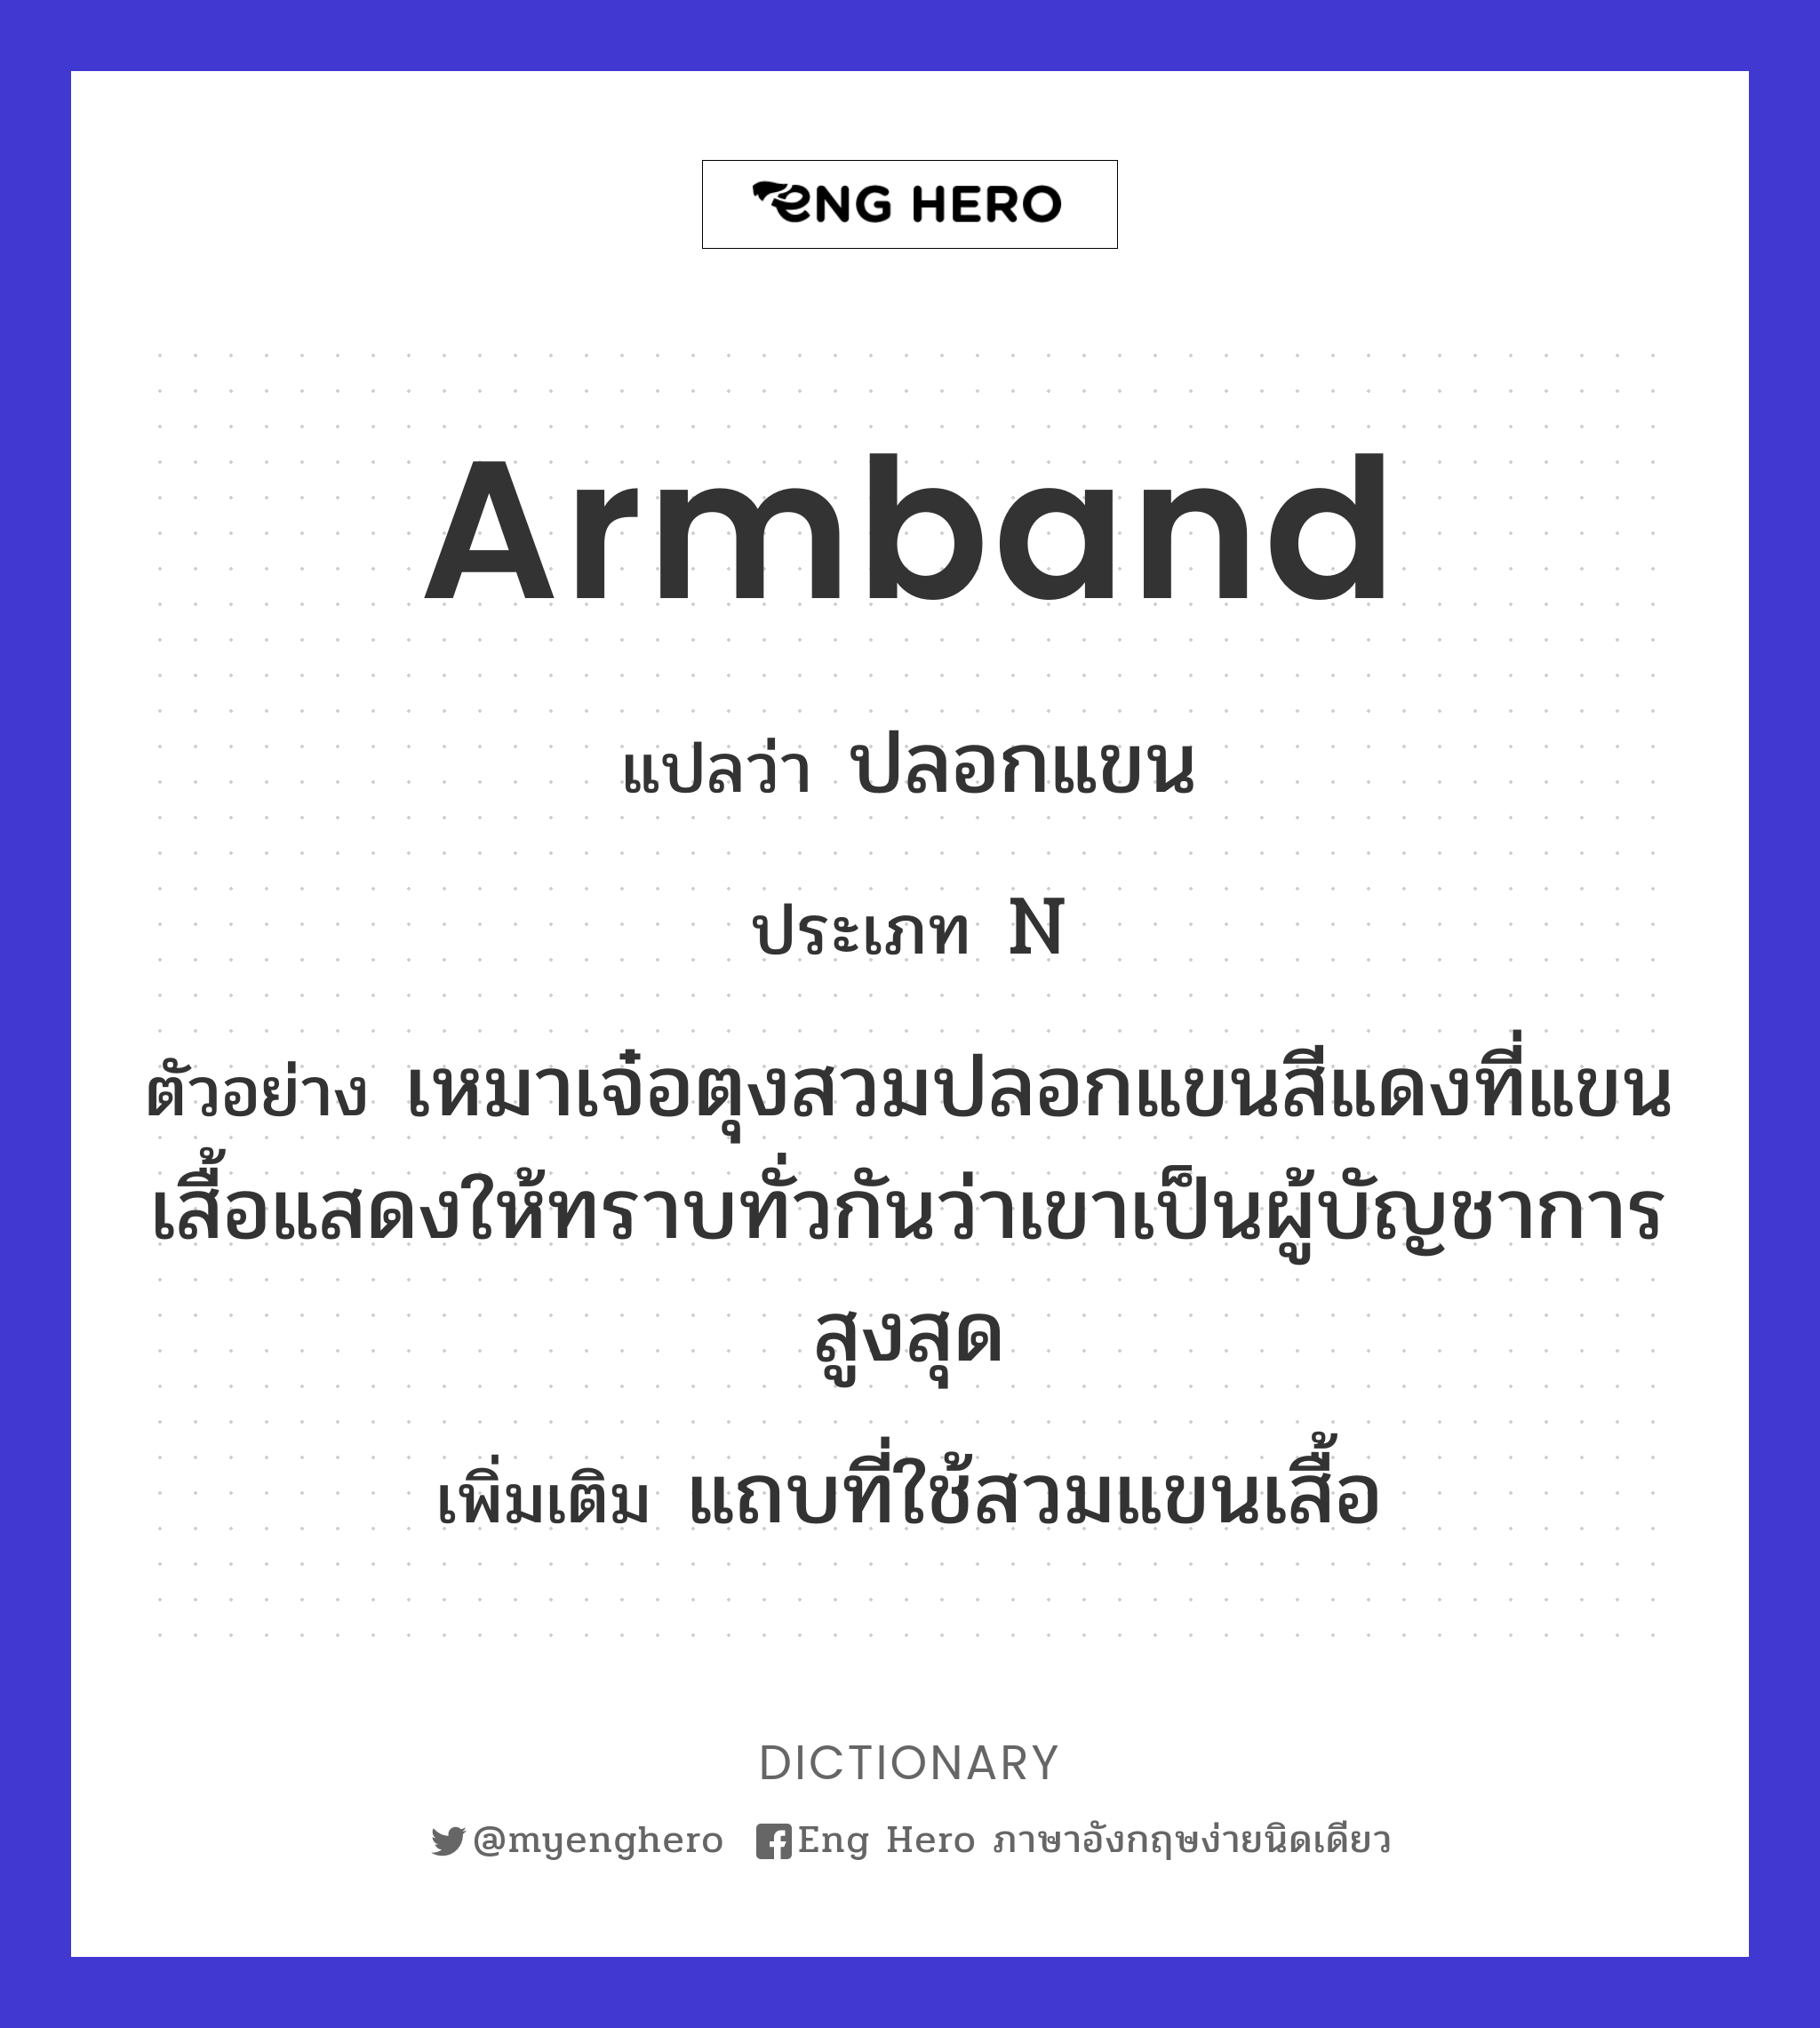 armband